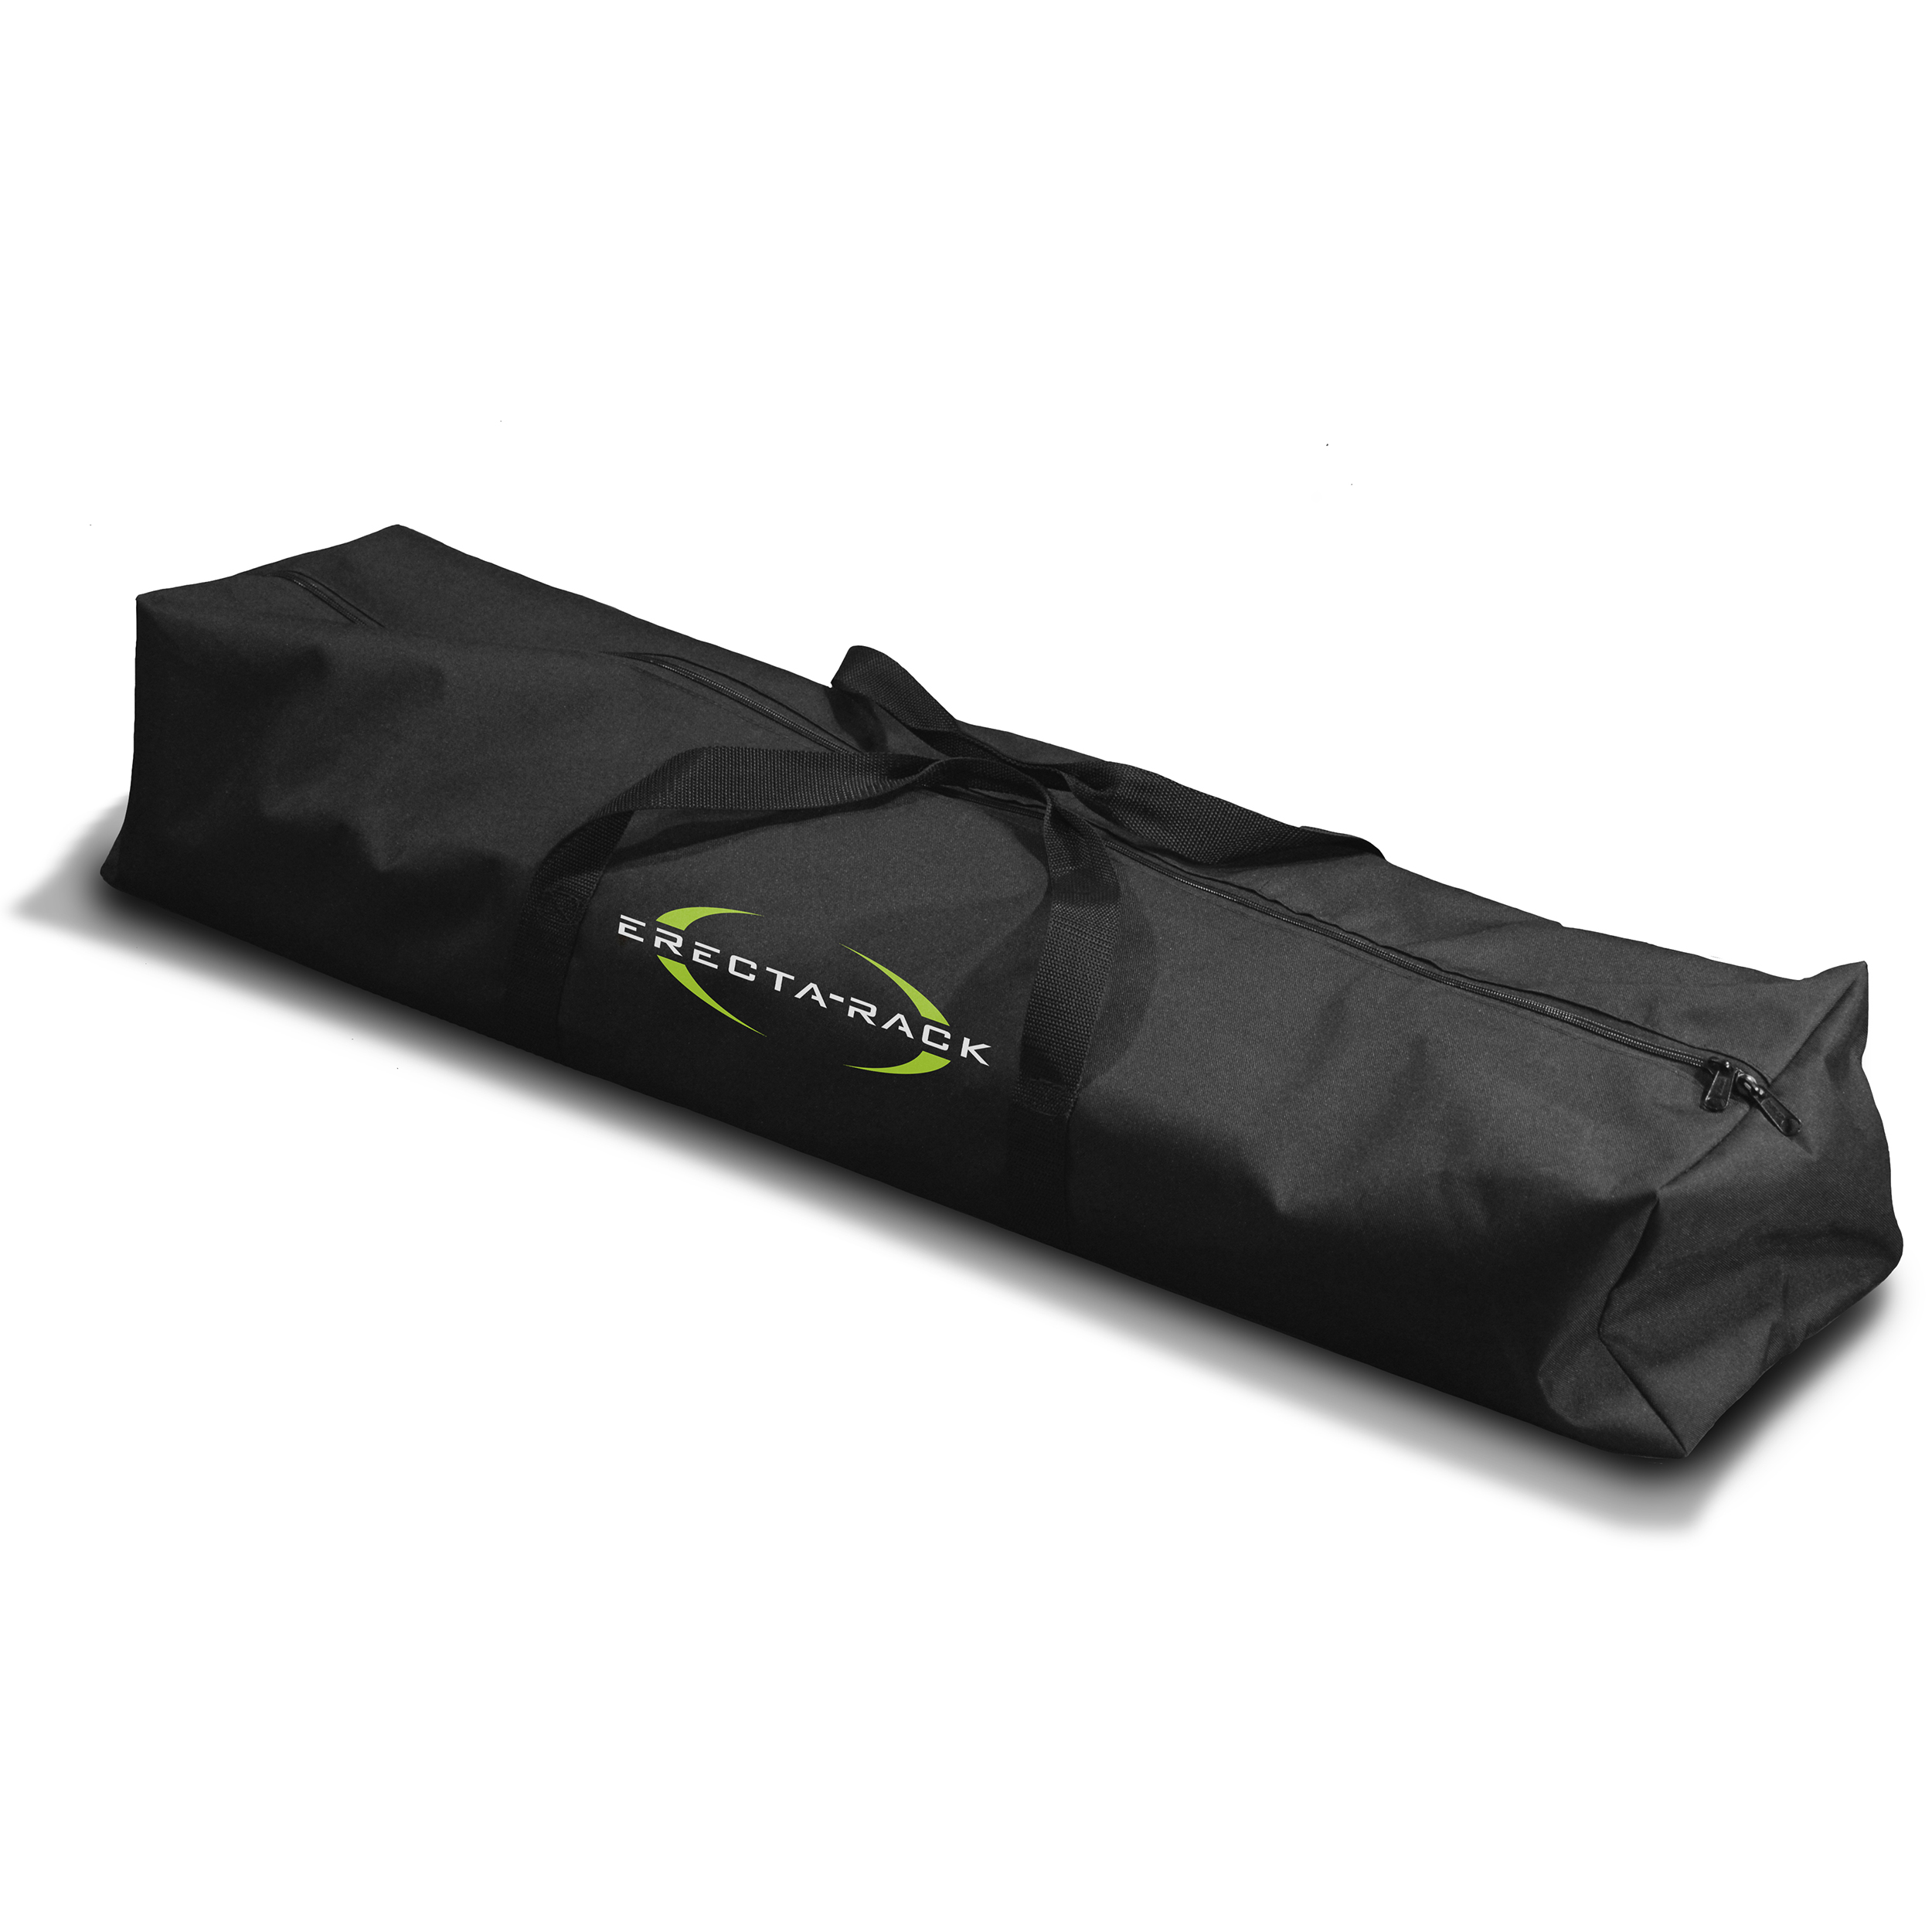 Erecta-rack Custom Carry Bag